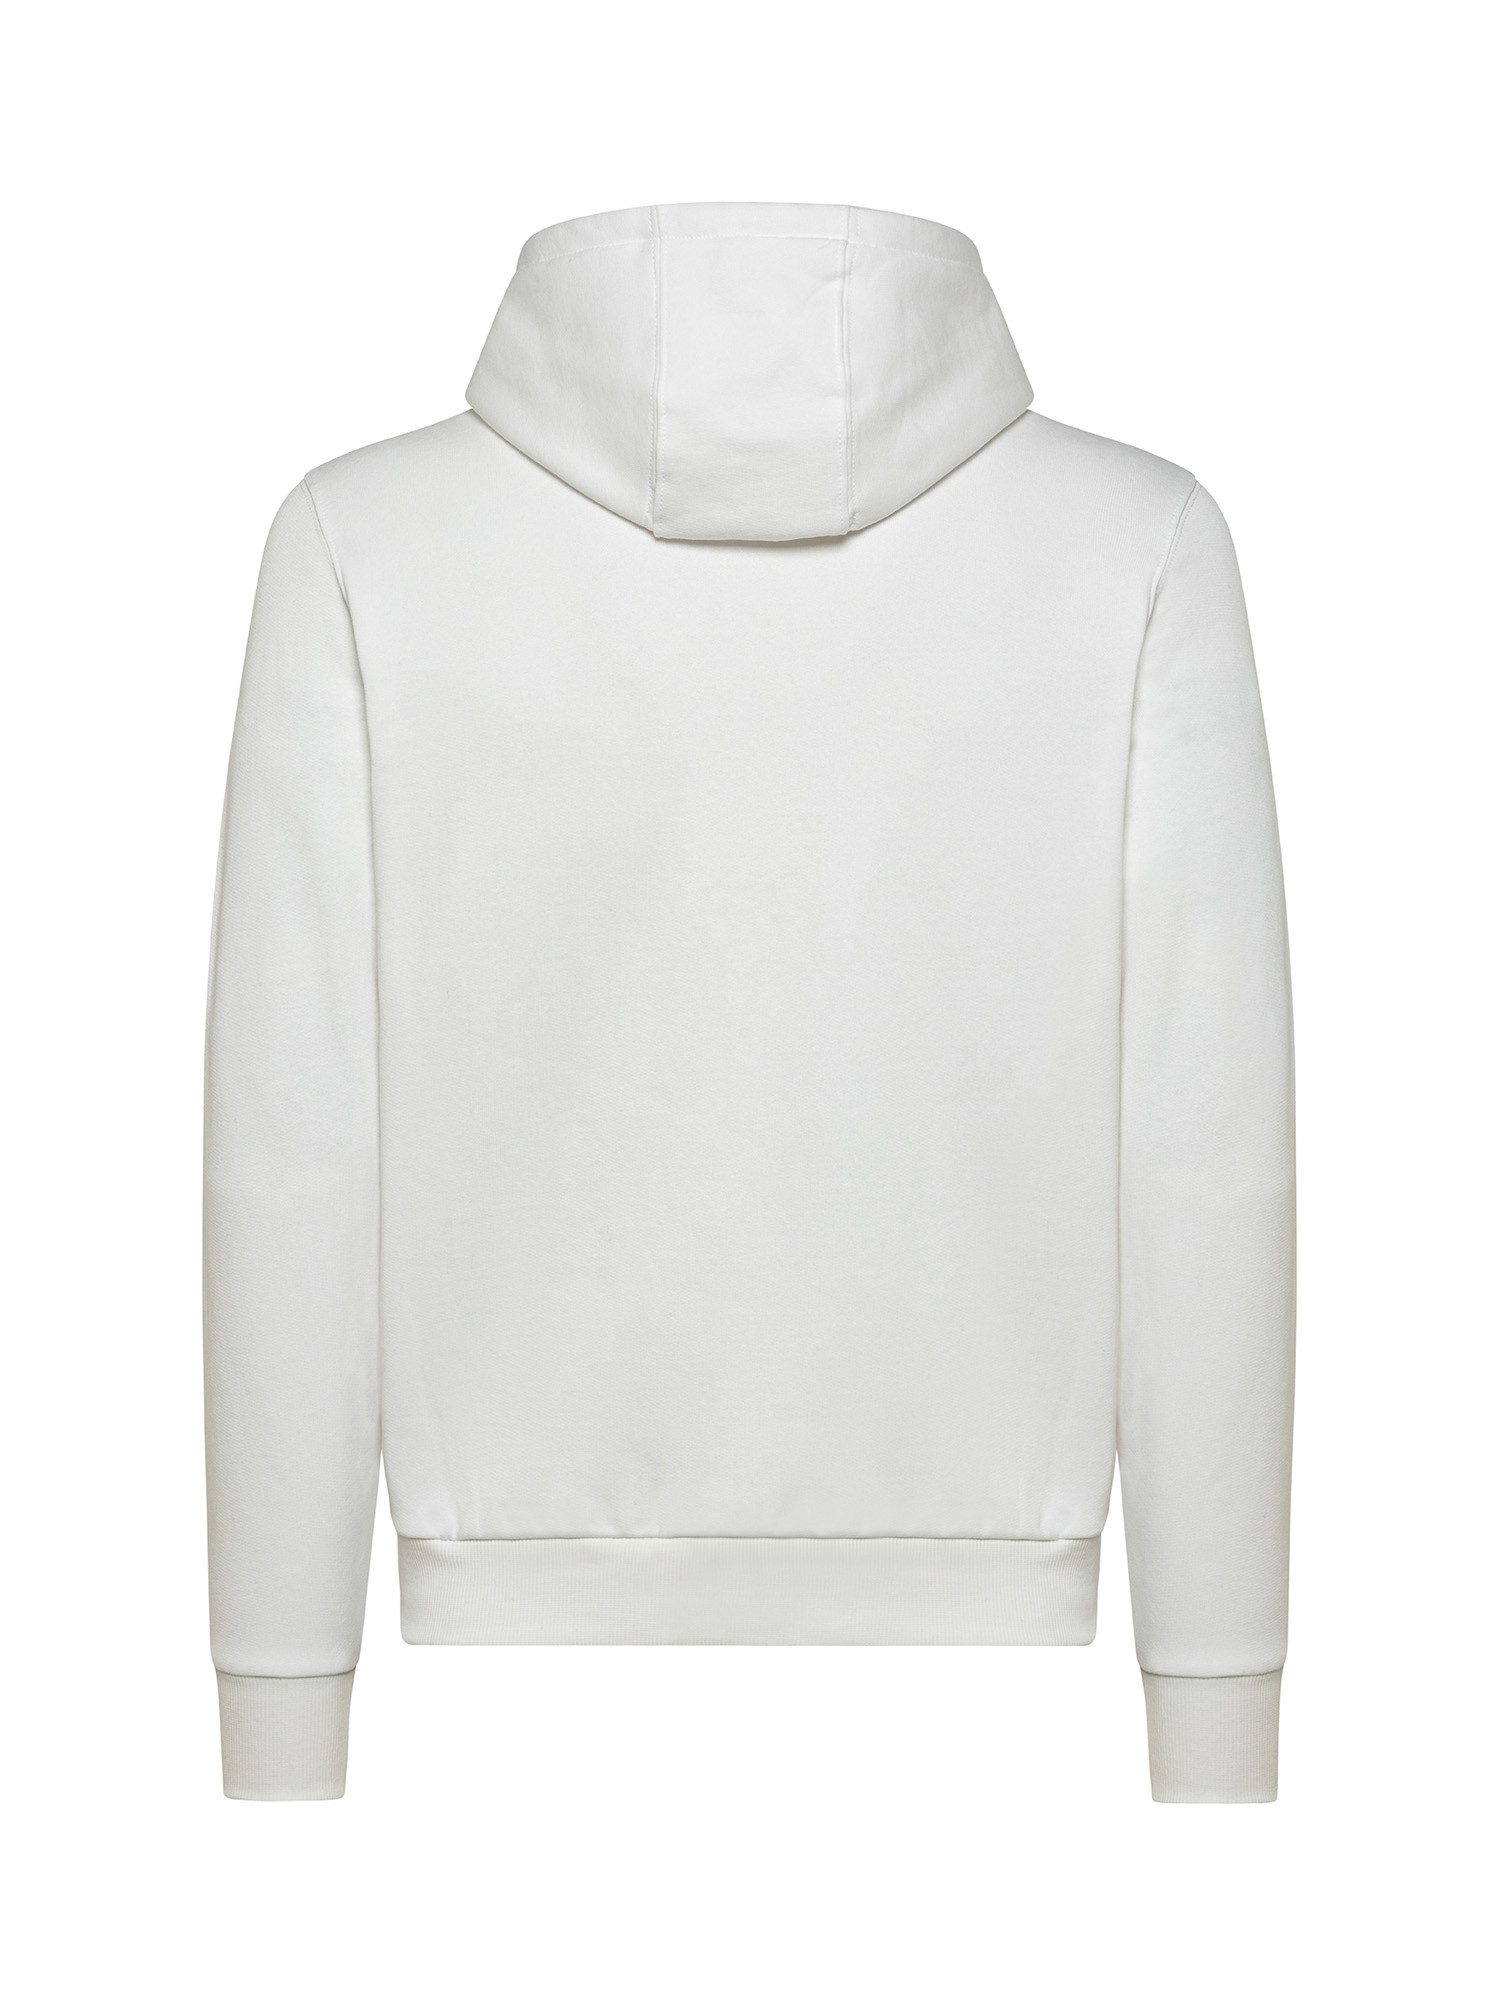 Hoodie sweatshirt with graphic, Beige, large image number 1